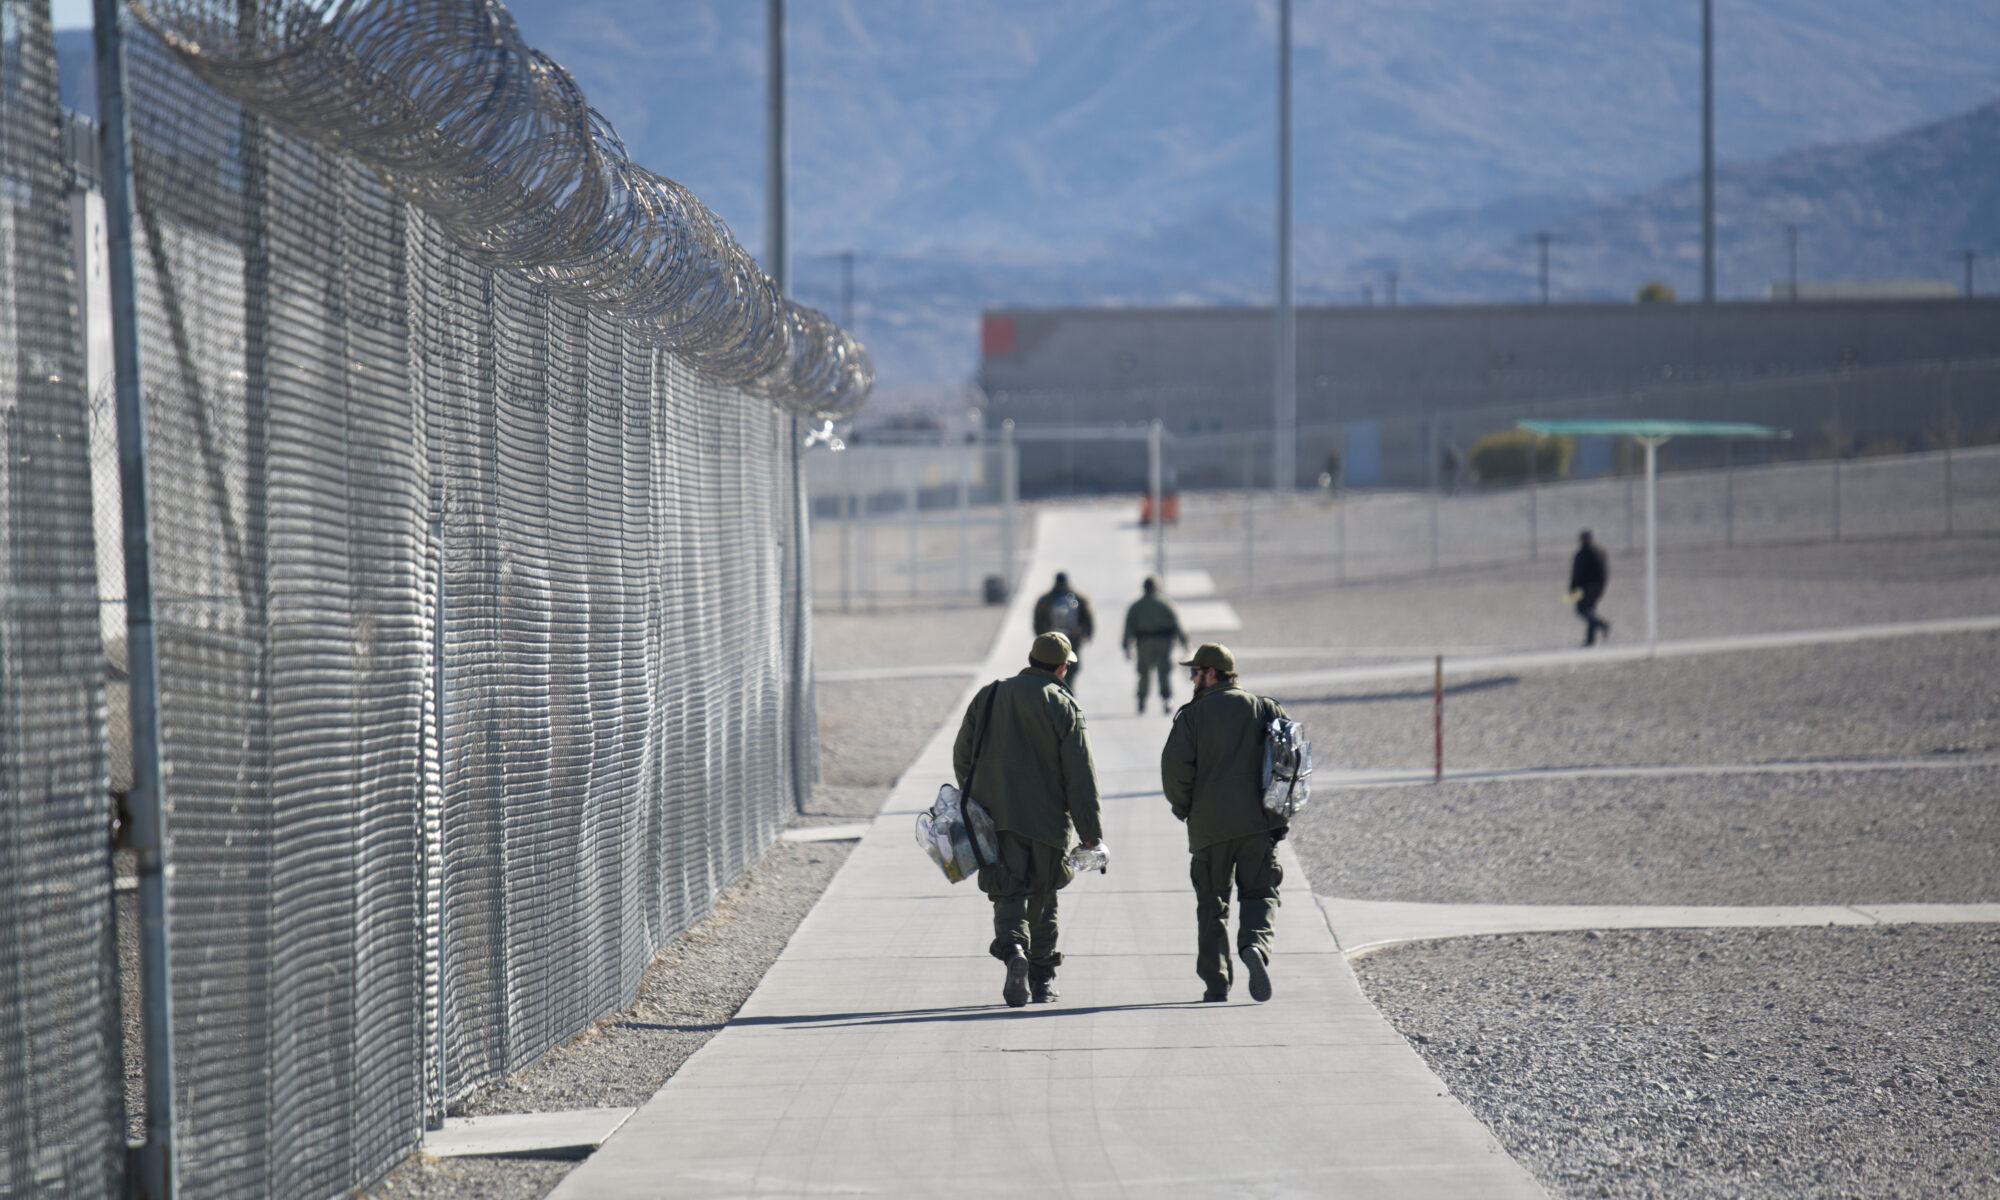 Guards walk inside High Desert State Prison